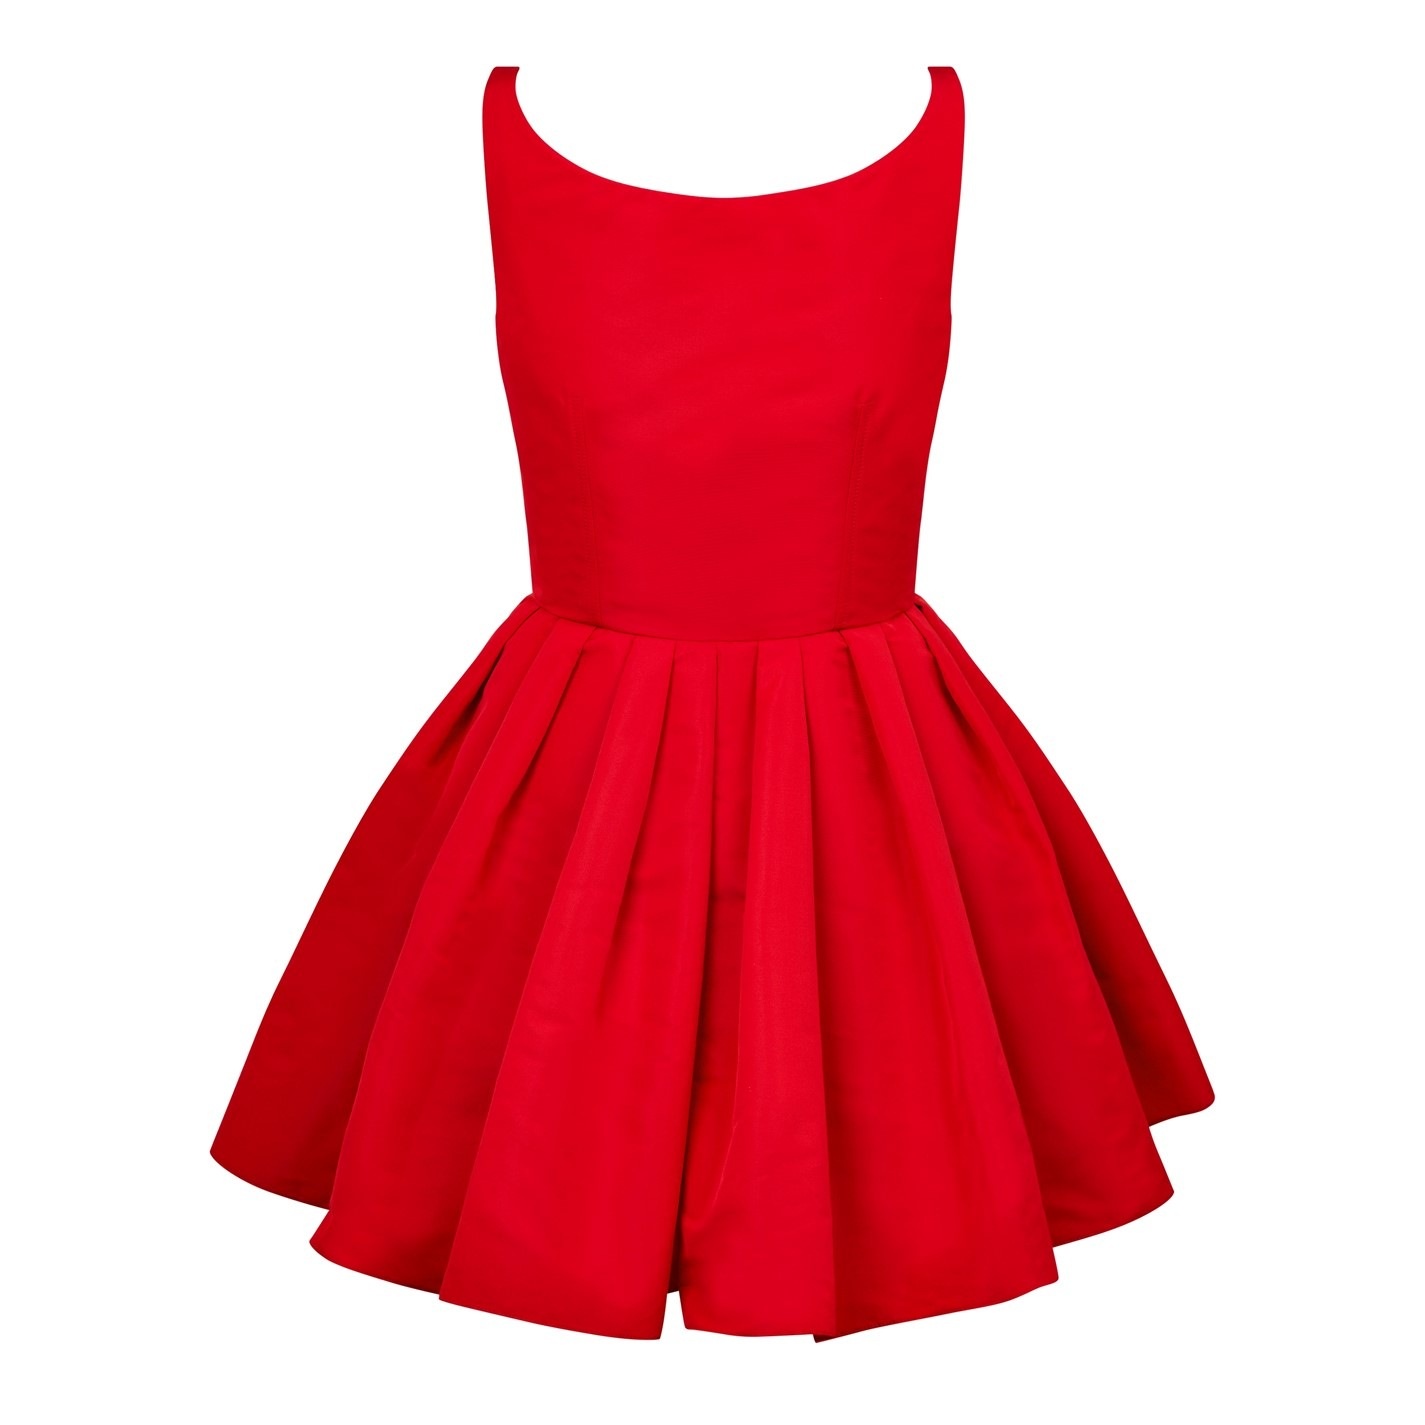 RED ZIP DETAIL DRESS - 5